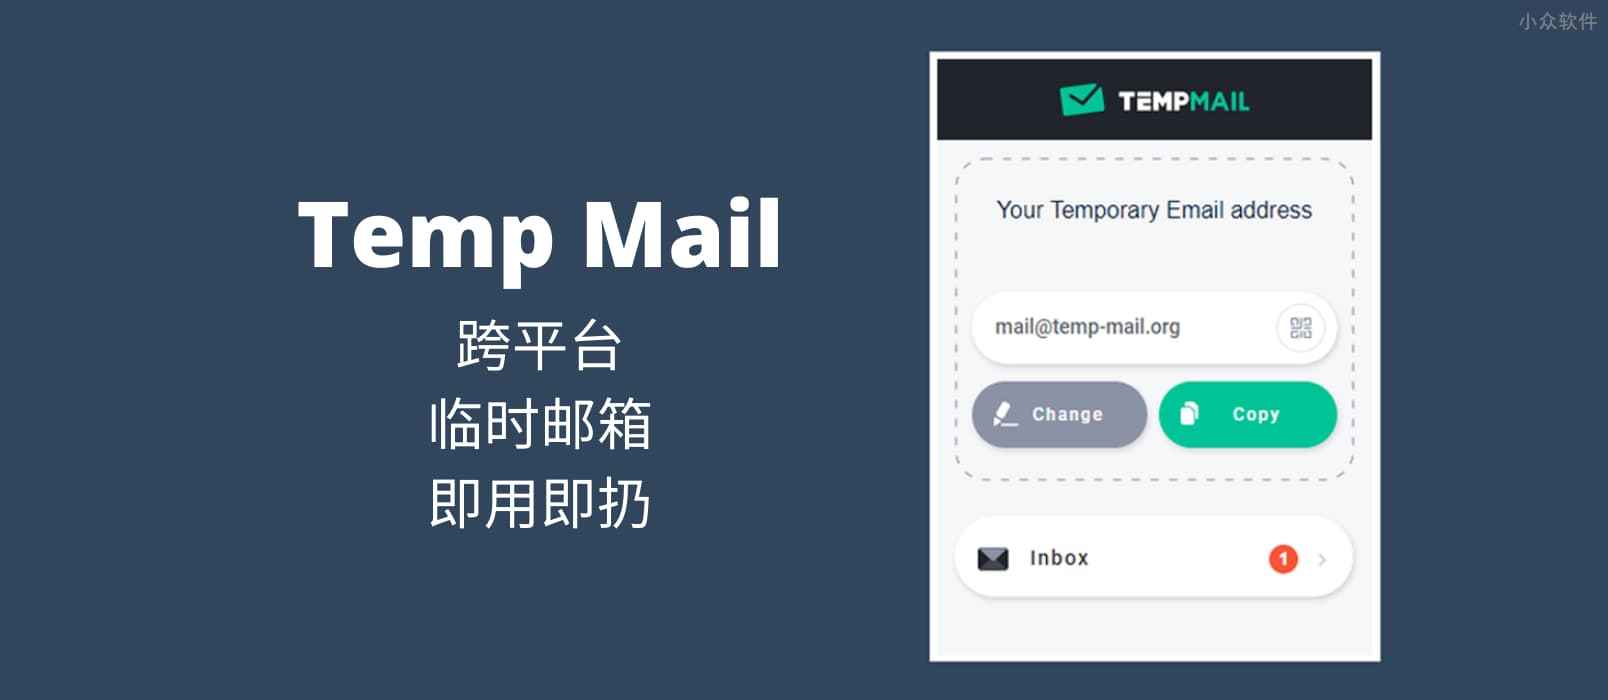 Temp Mail – 跨平台的临时一次性电子邮箱服务